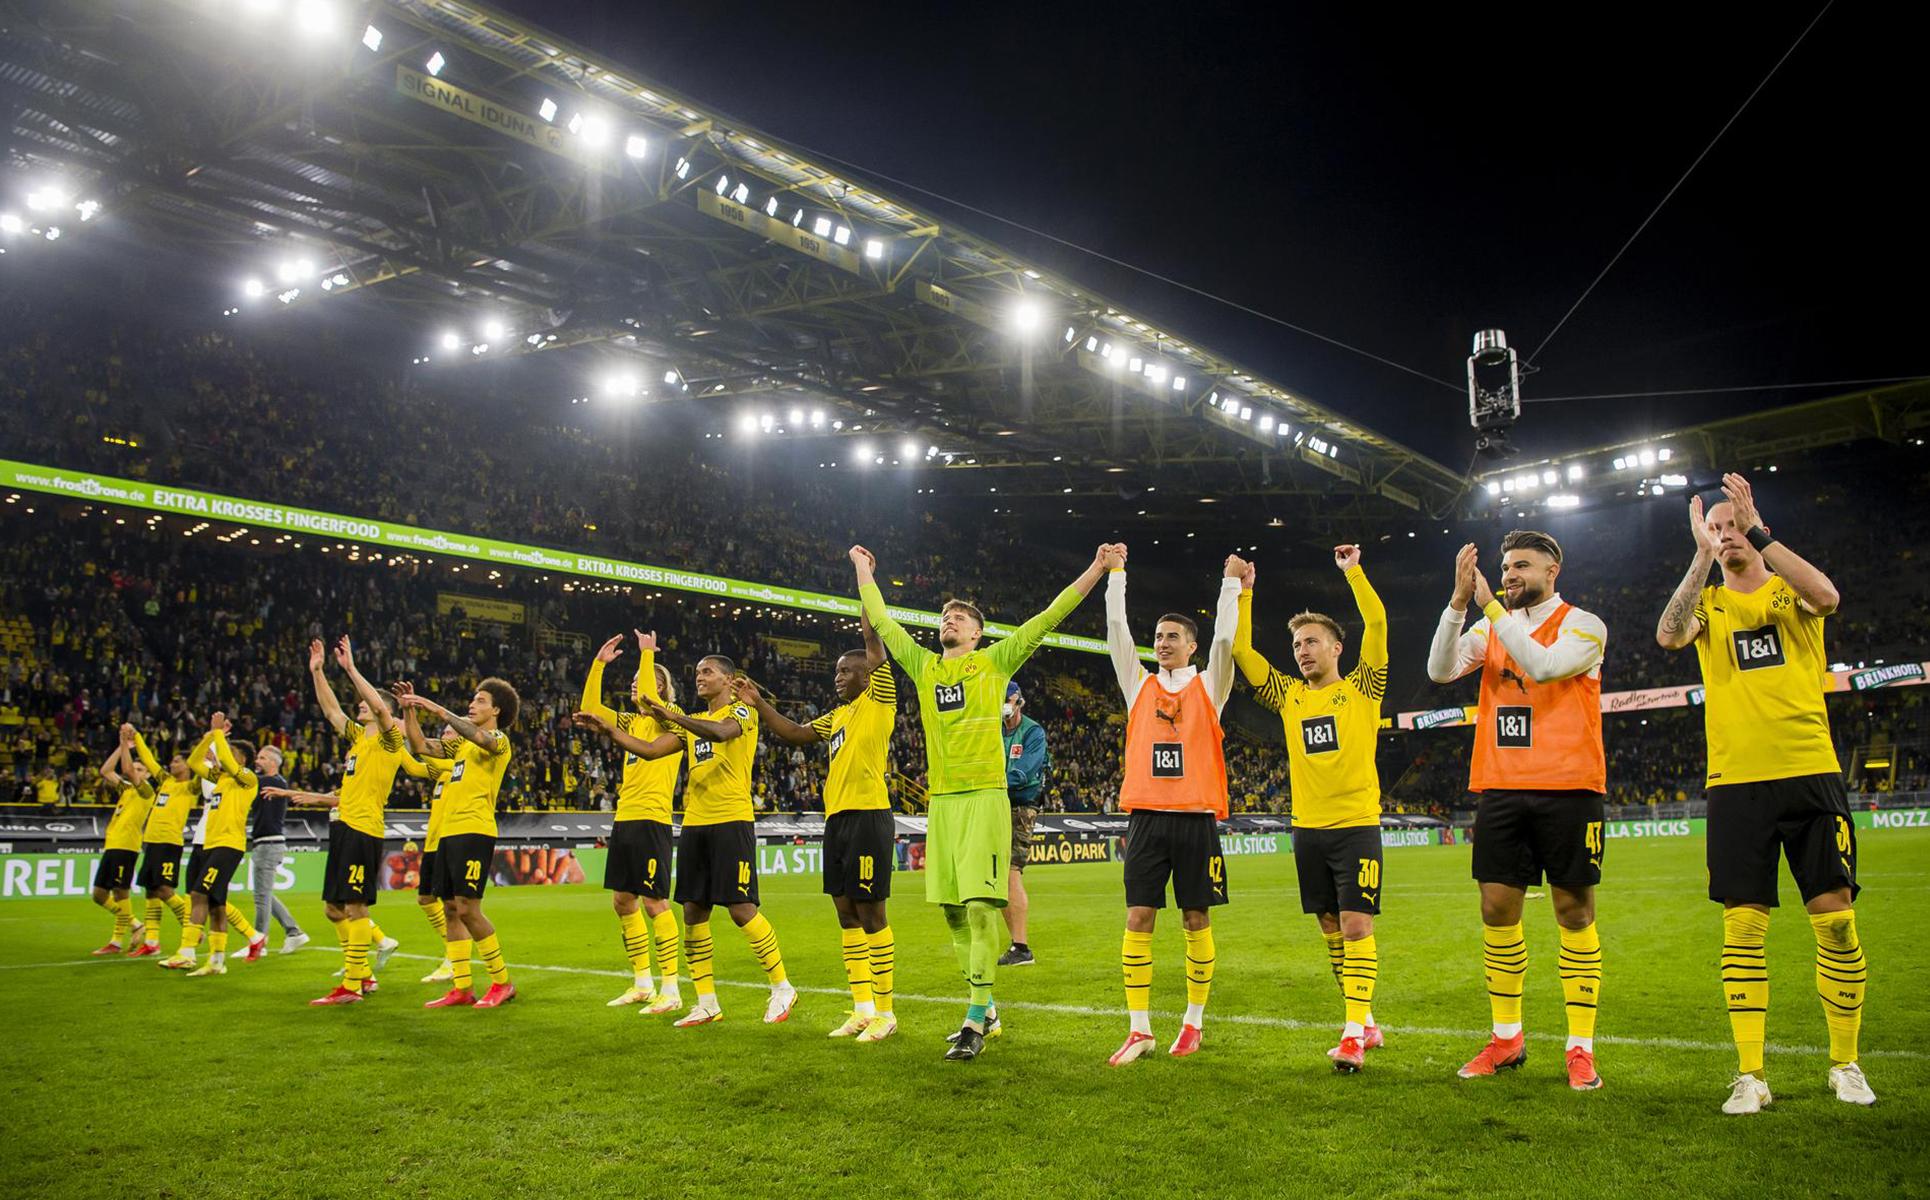 FLEX is een trotse partner van voetbalclub Borussia Dortmund (BVB)